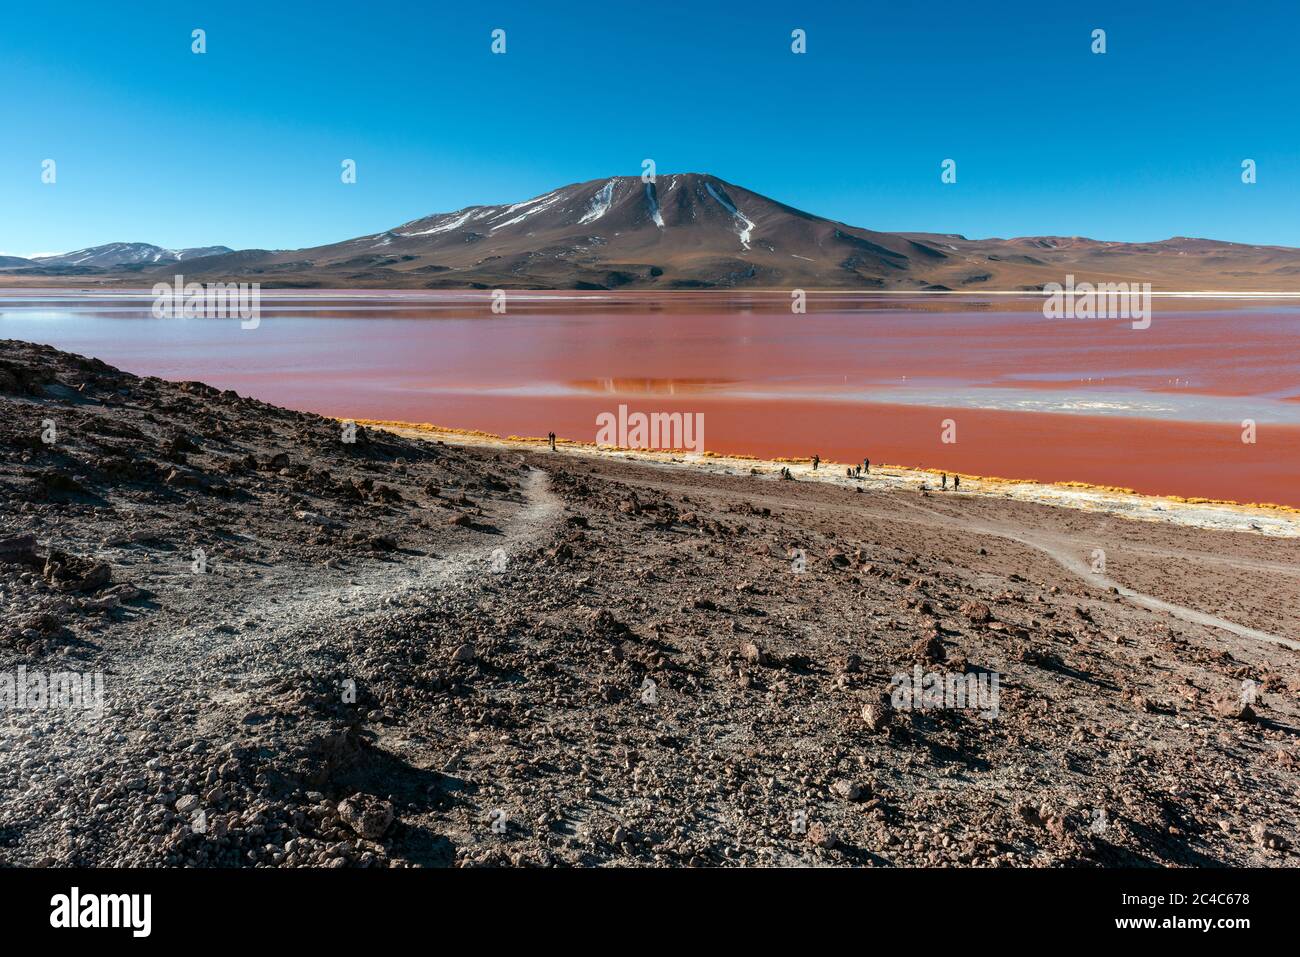 Landscape of the Laguna Colorada or Red Lagoon in the Andes altiplano, Uyuni salt flat desert, Bolivia. Stock Photo